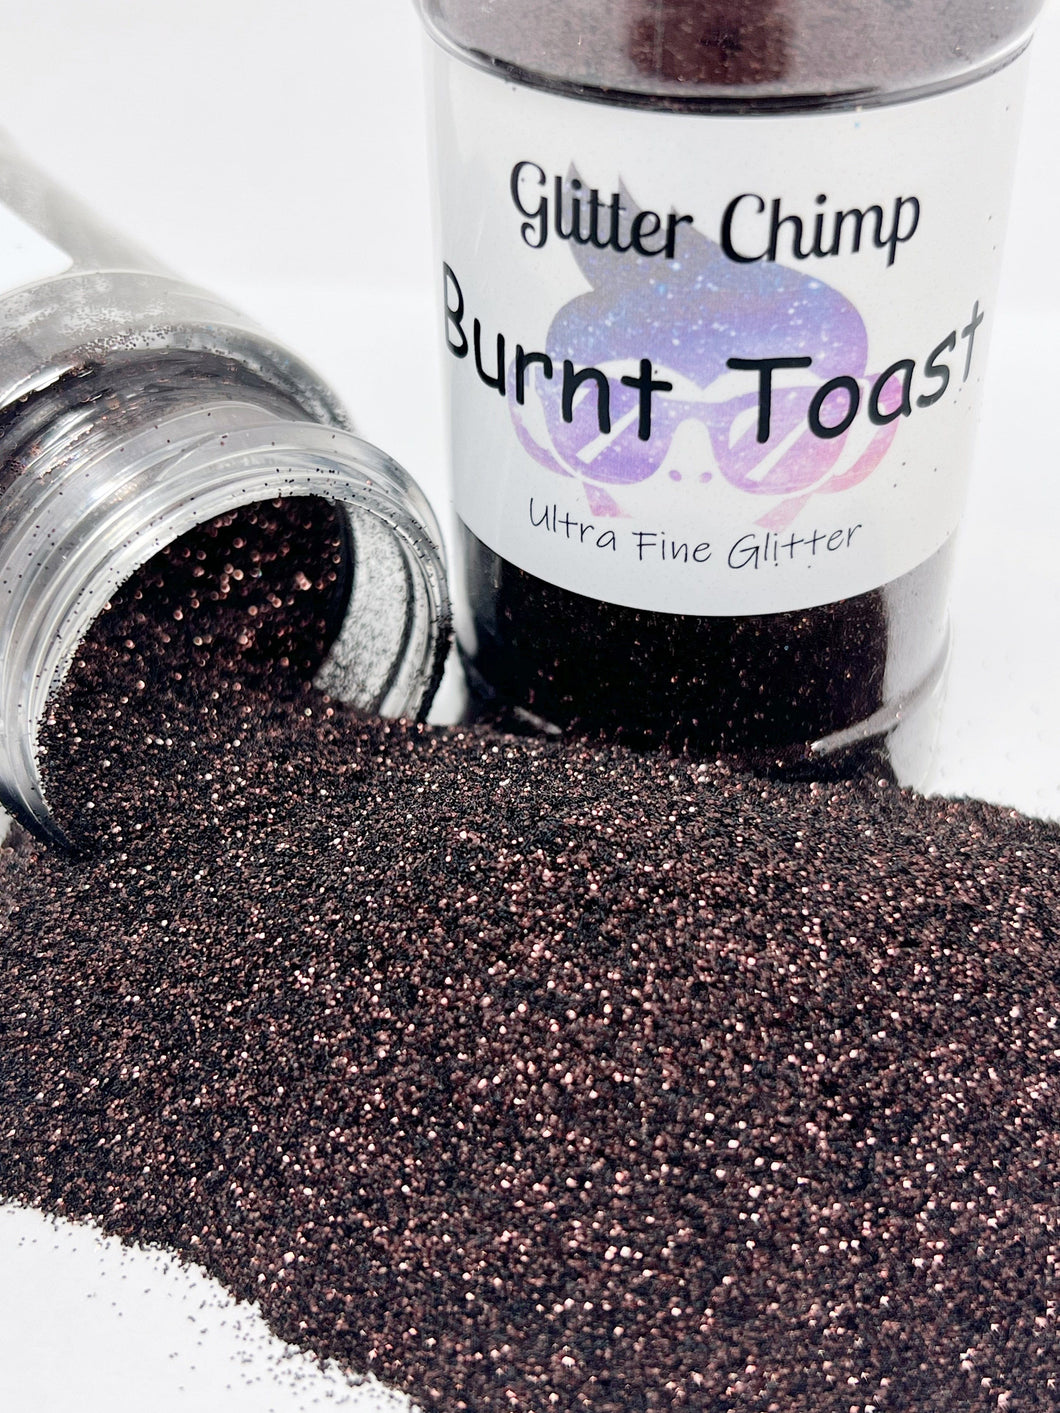 Burnt Toast - Ultra Fine Glitter